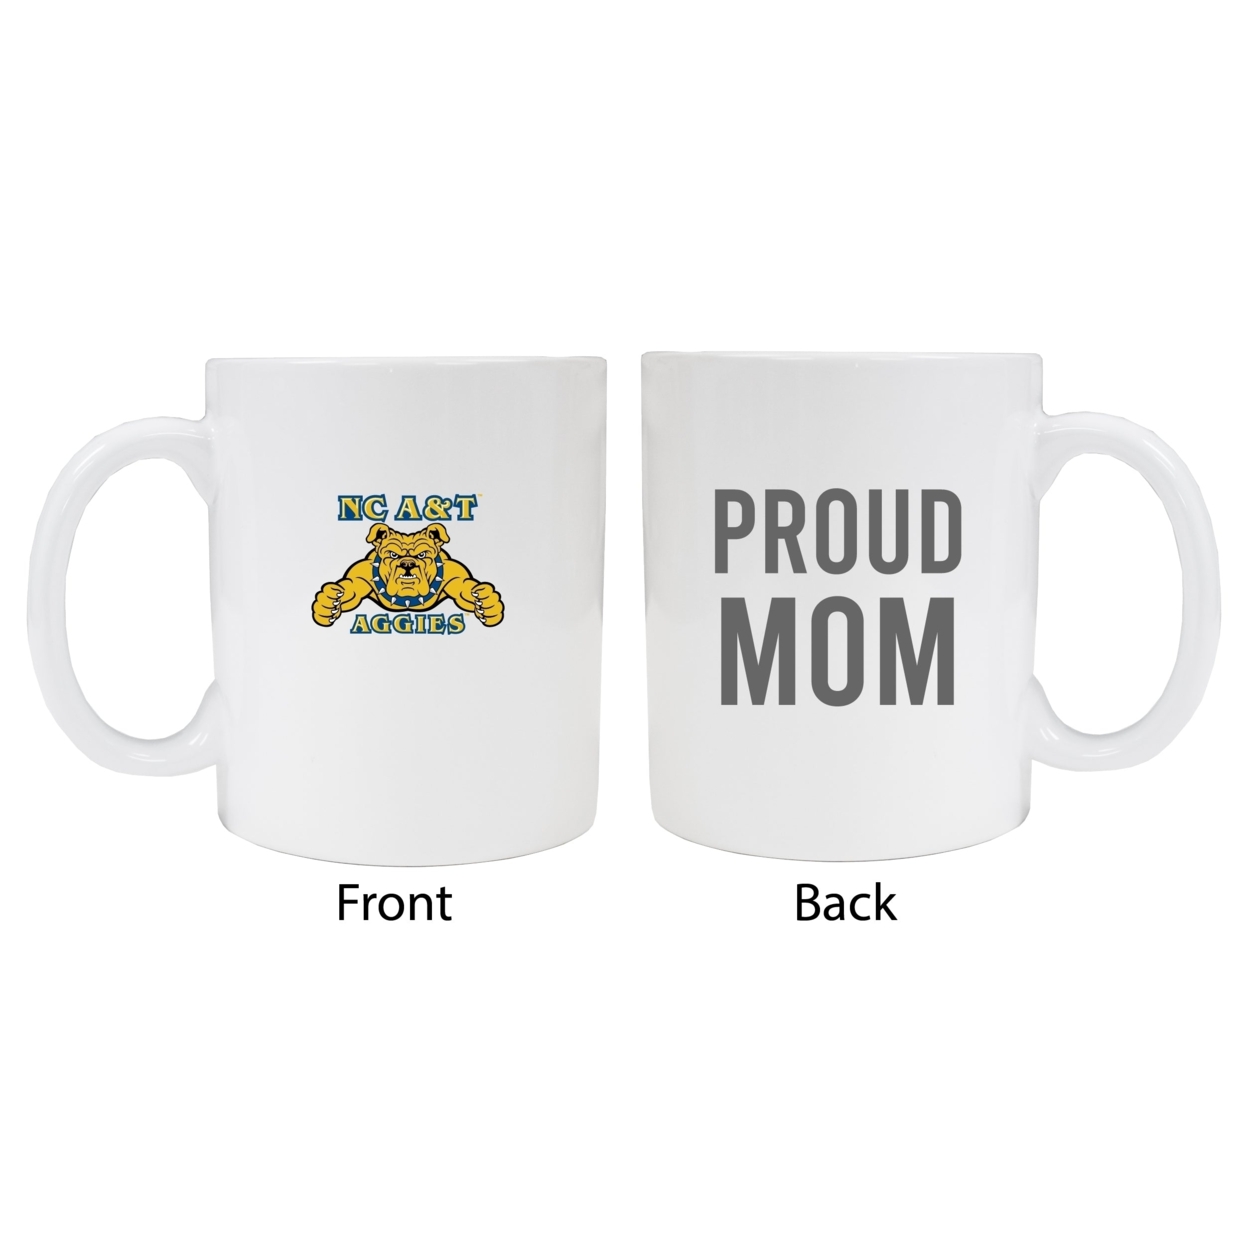 North Carolina A&T State Aggies Proud Mom Ceramic Coffee Mug - White (2 Pack)